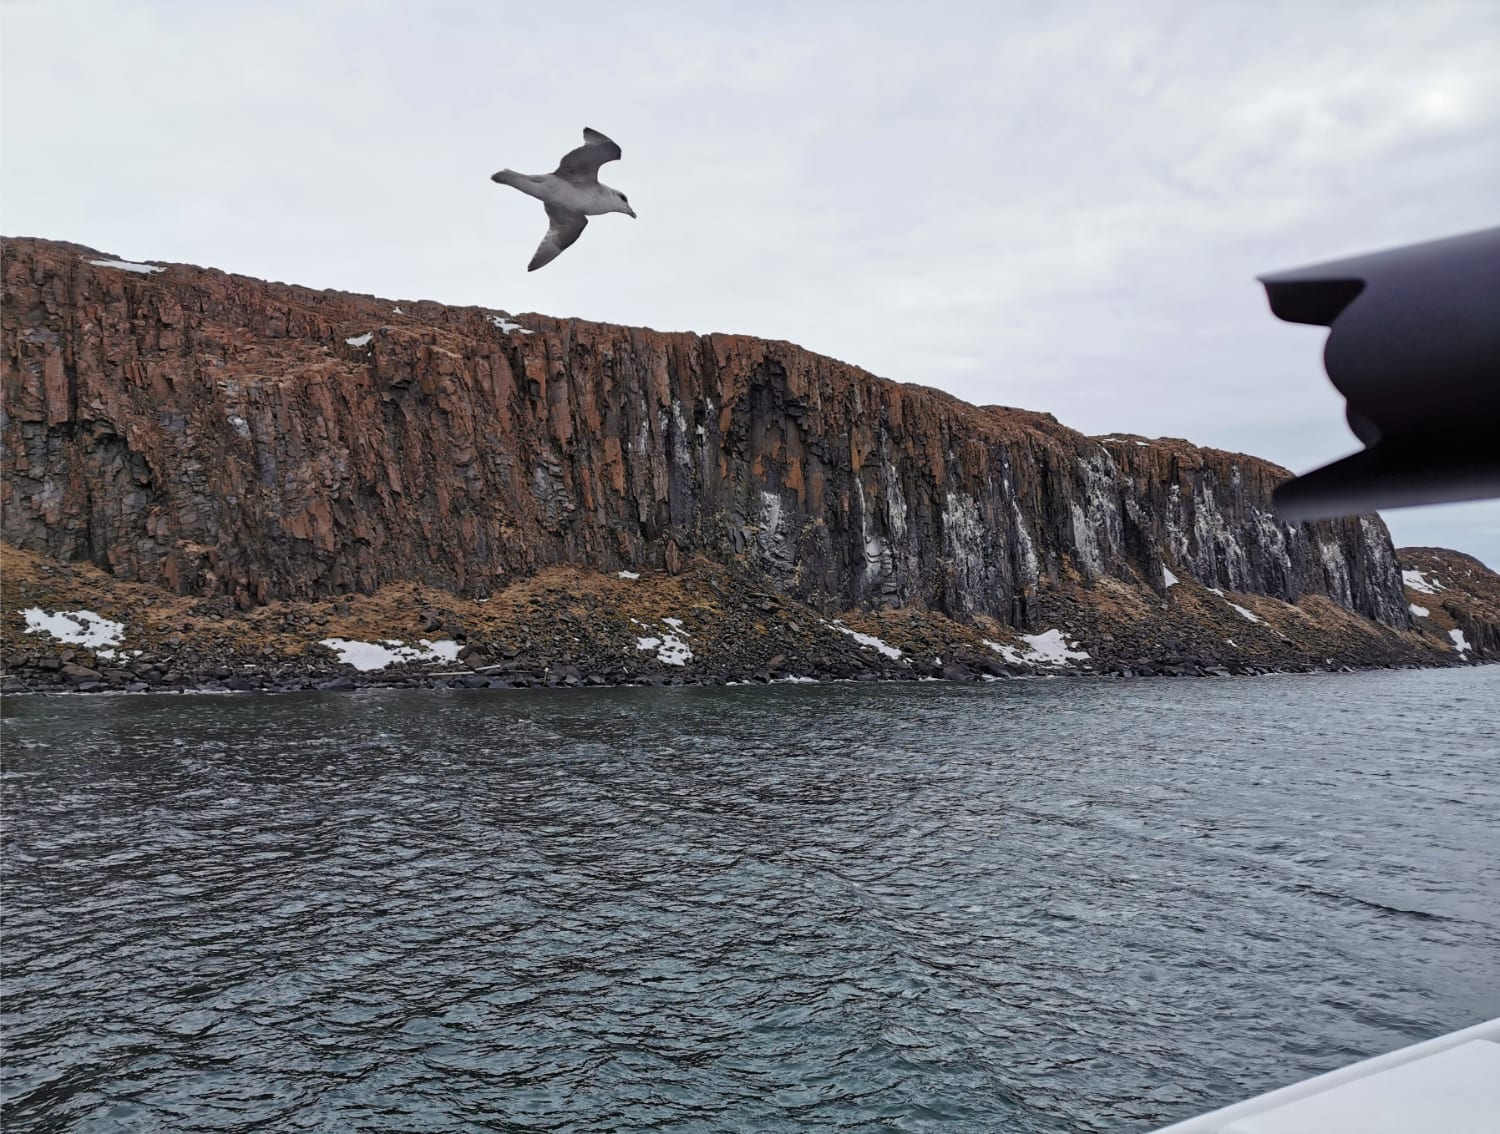 Grumant and Fuglefjellet (bird cliffs)